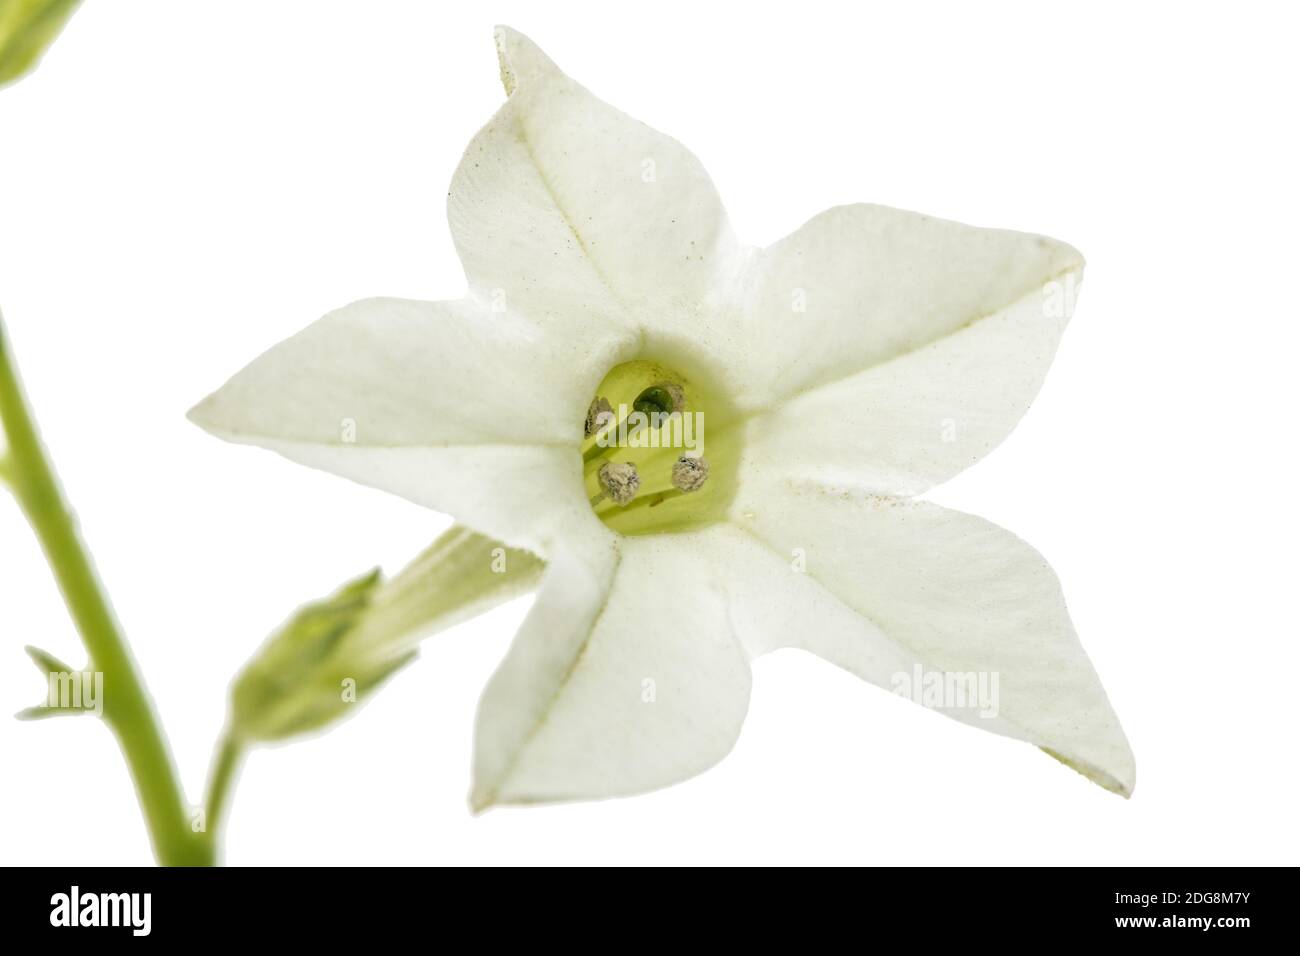 Flower of fragrant tobacco, lat. Nicotiana sanderae, isolated on white background Stock Photo